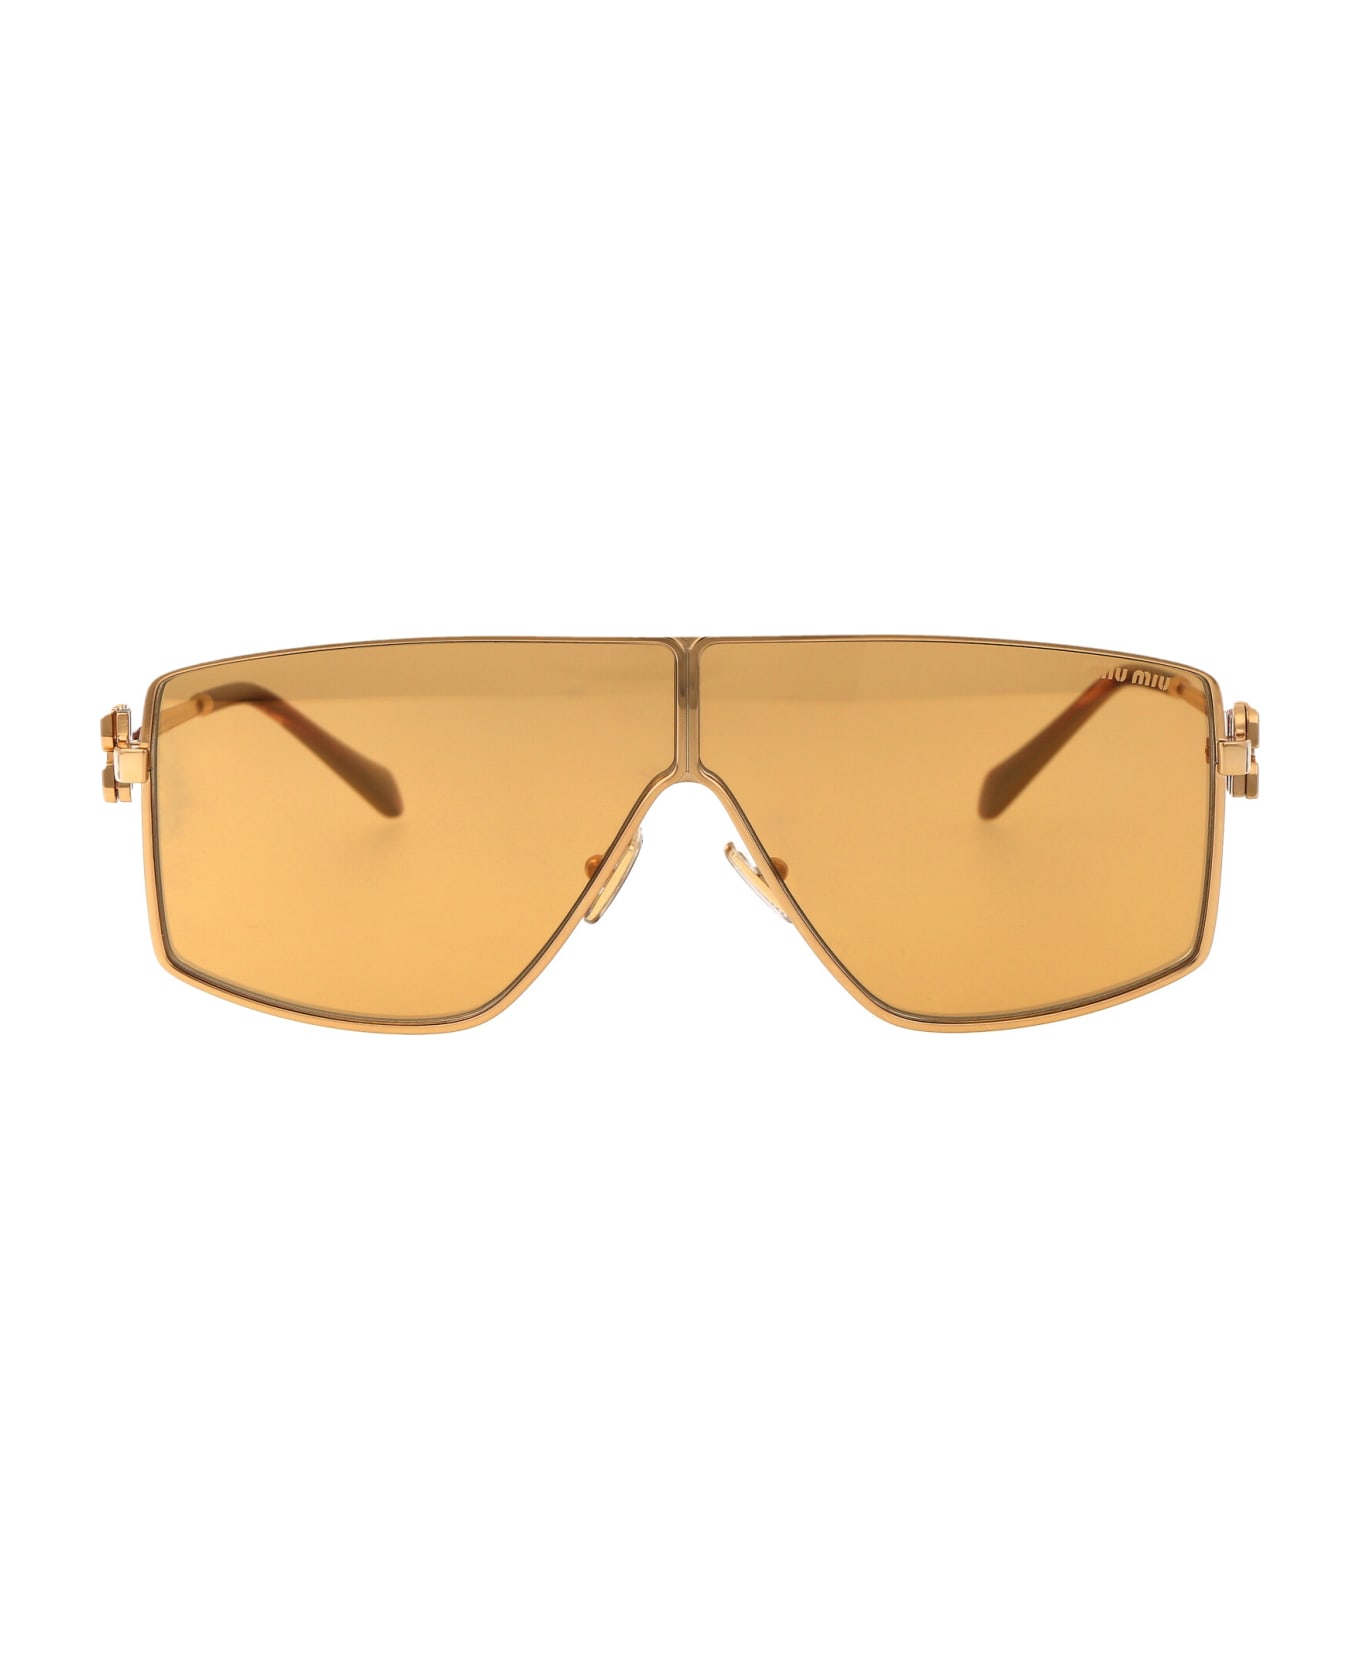 Miu Miu Eyewear 0mu 51zs Sunglasses - 5AK40D Gold